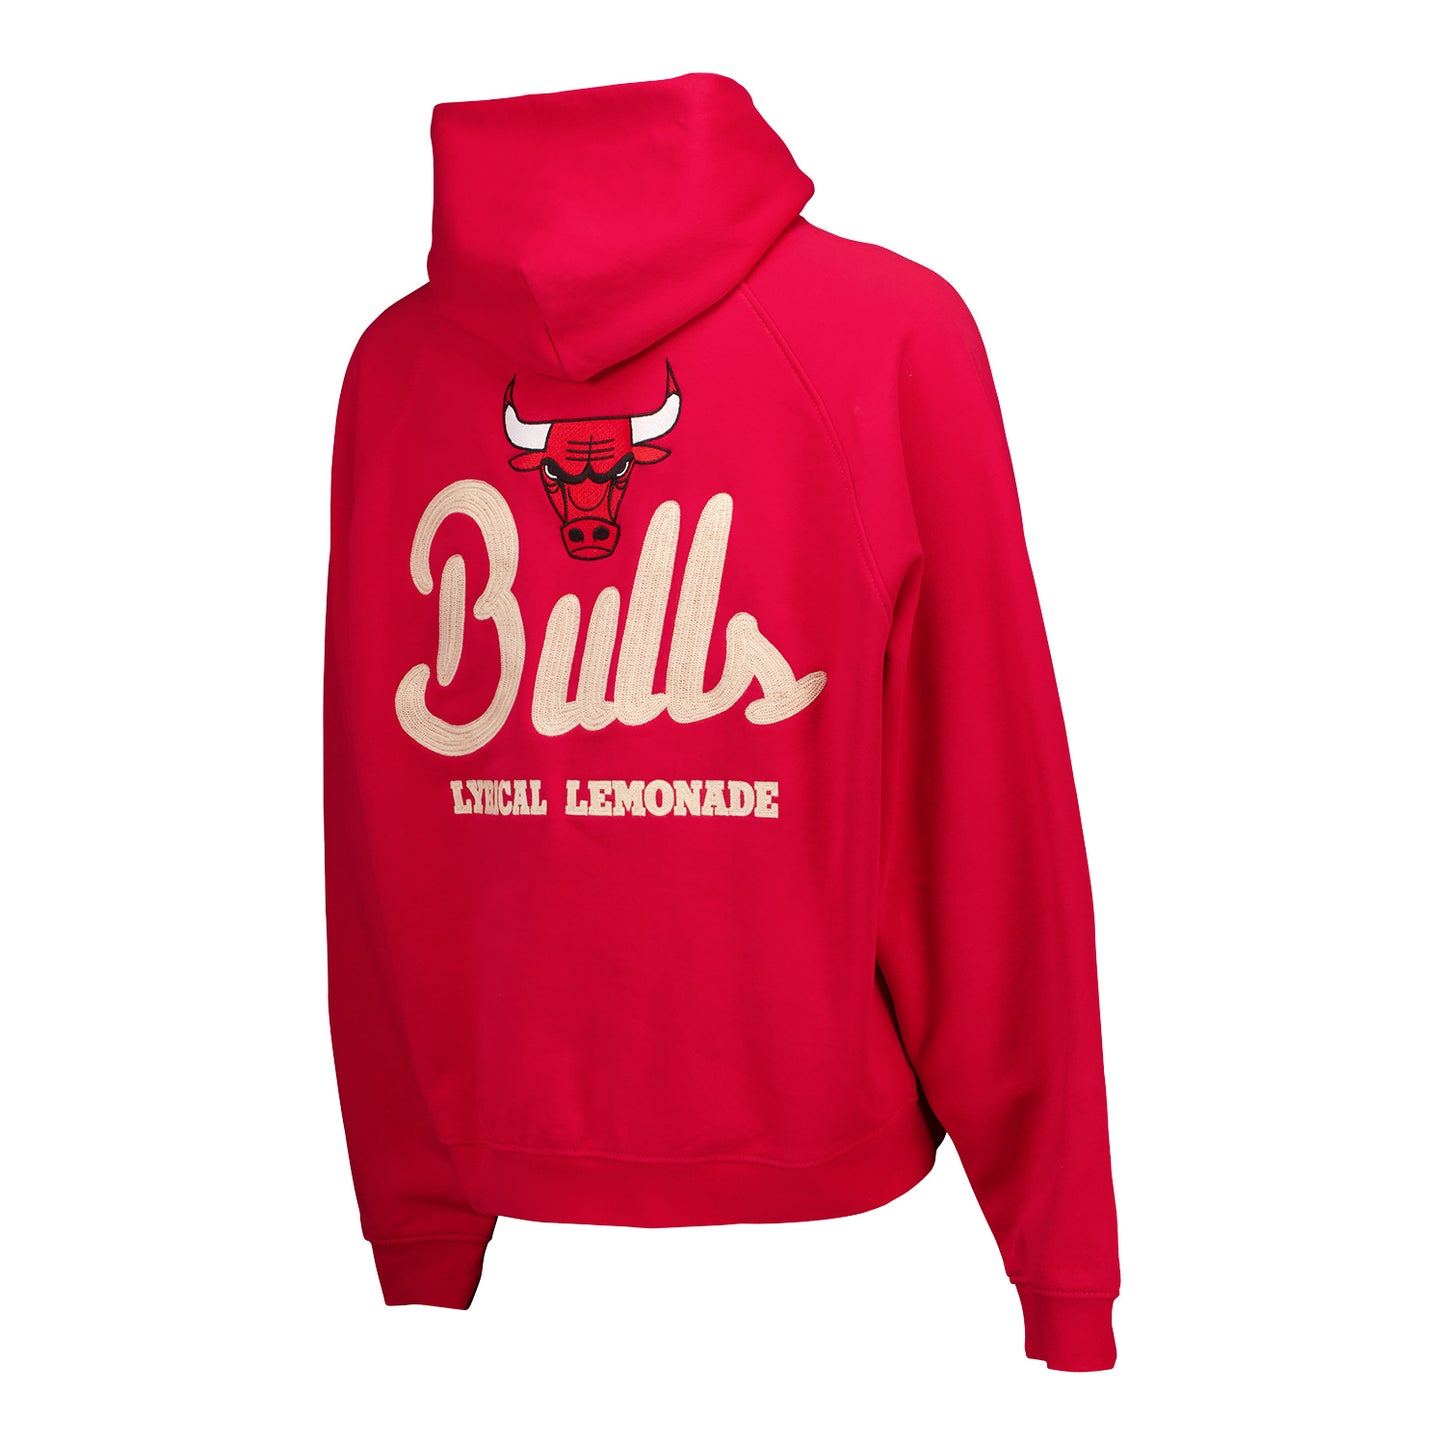 Chicago Bulls x Lyrical Lemonade Red Script Hooded Sweatshirt - back view